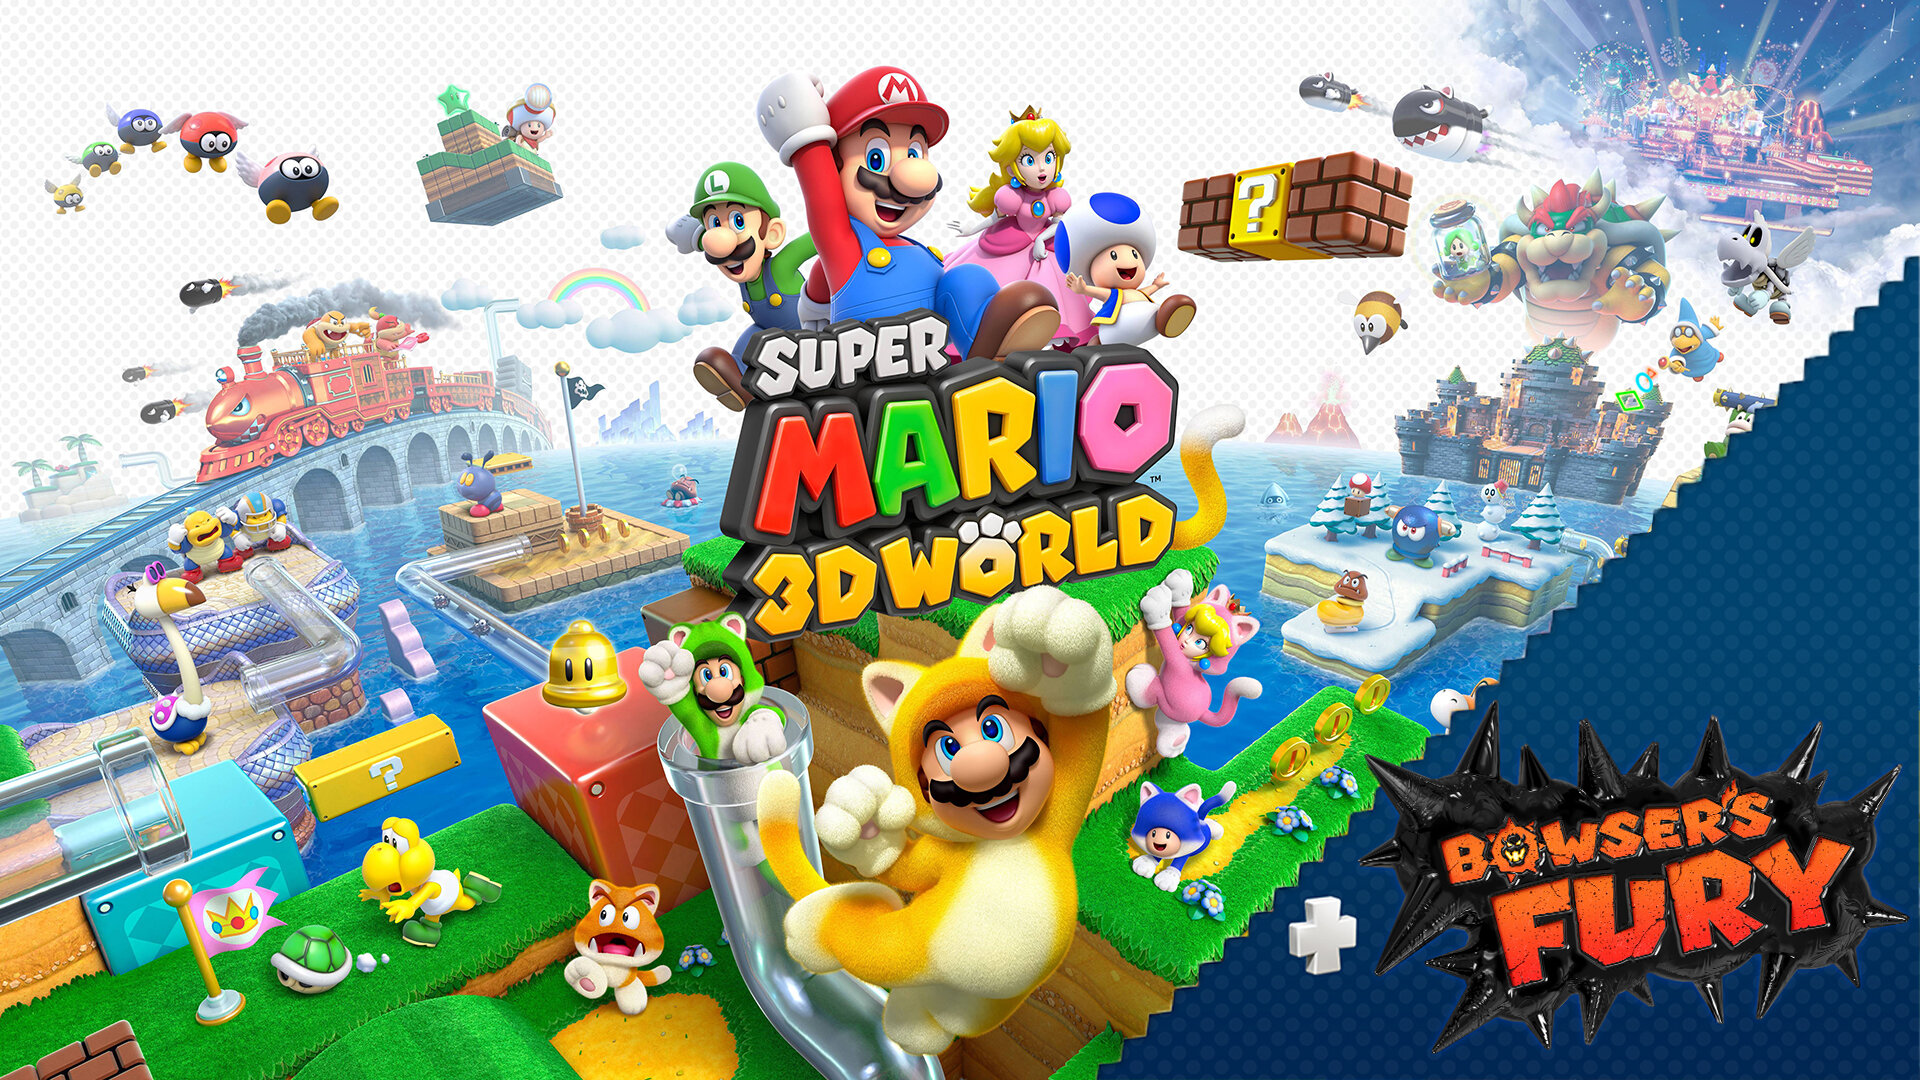 35 New Super Mario 3D World Bowser PNG Clipart 